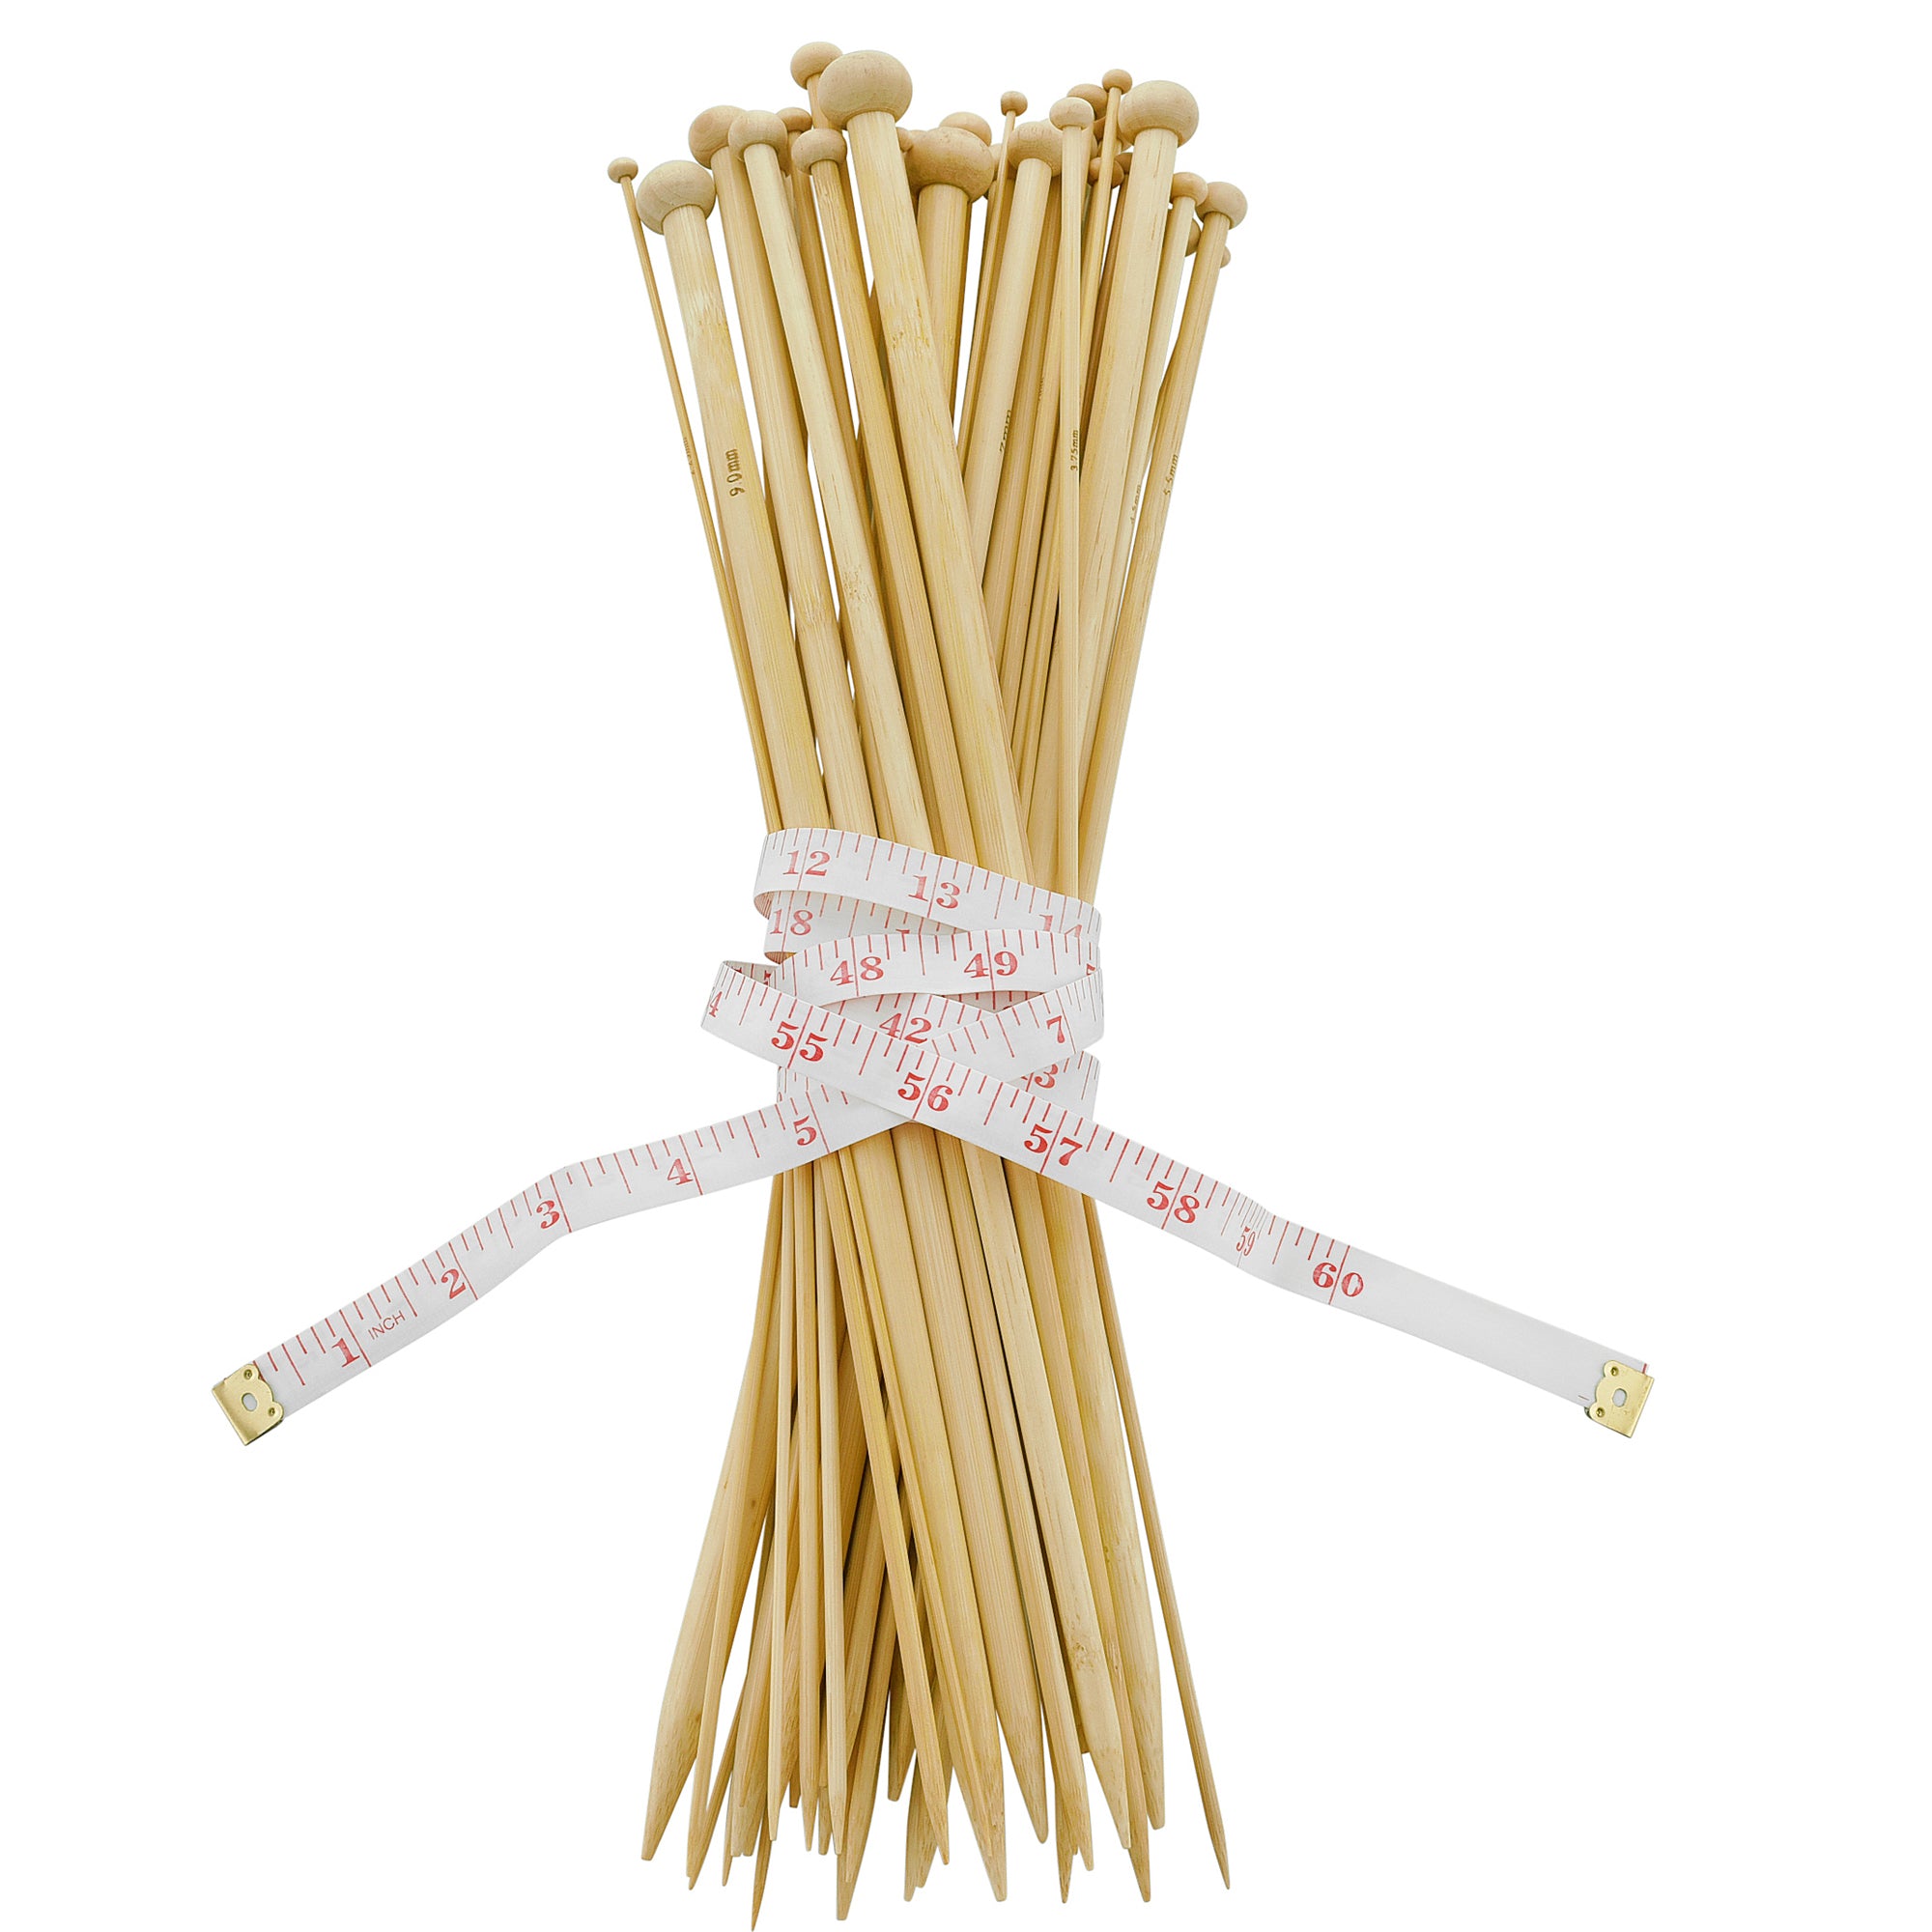 Bamboo 12 Single-point Knitting Needles, Size 7, Knitting